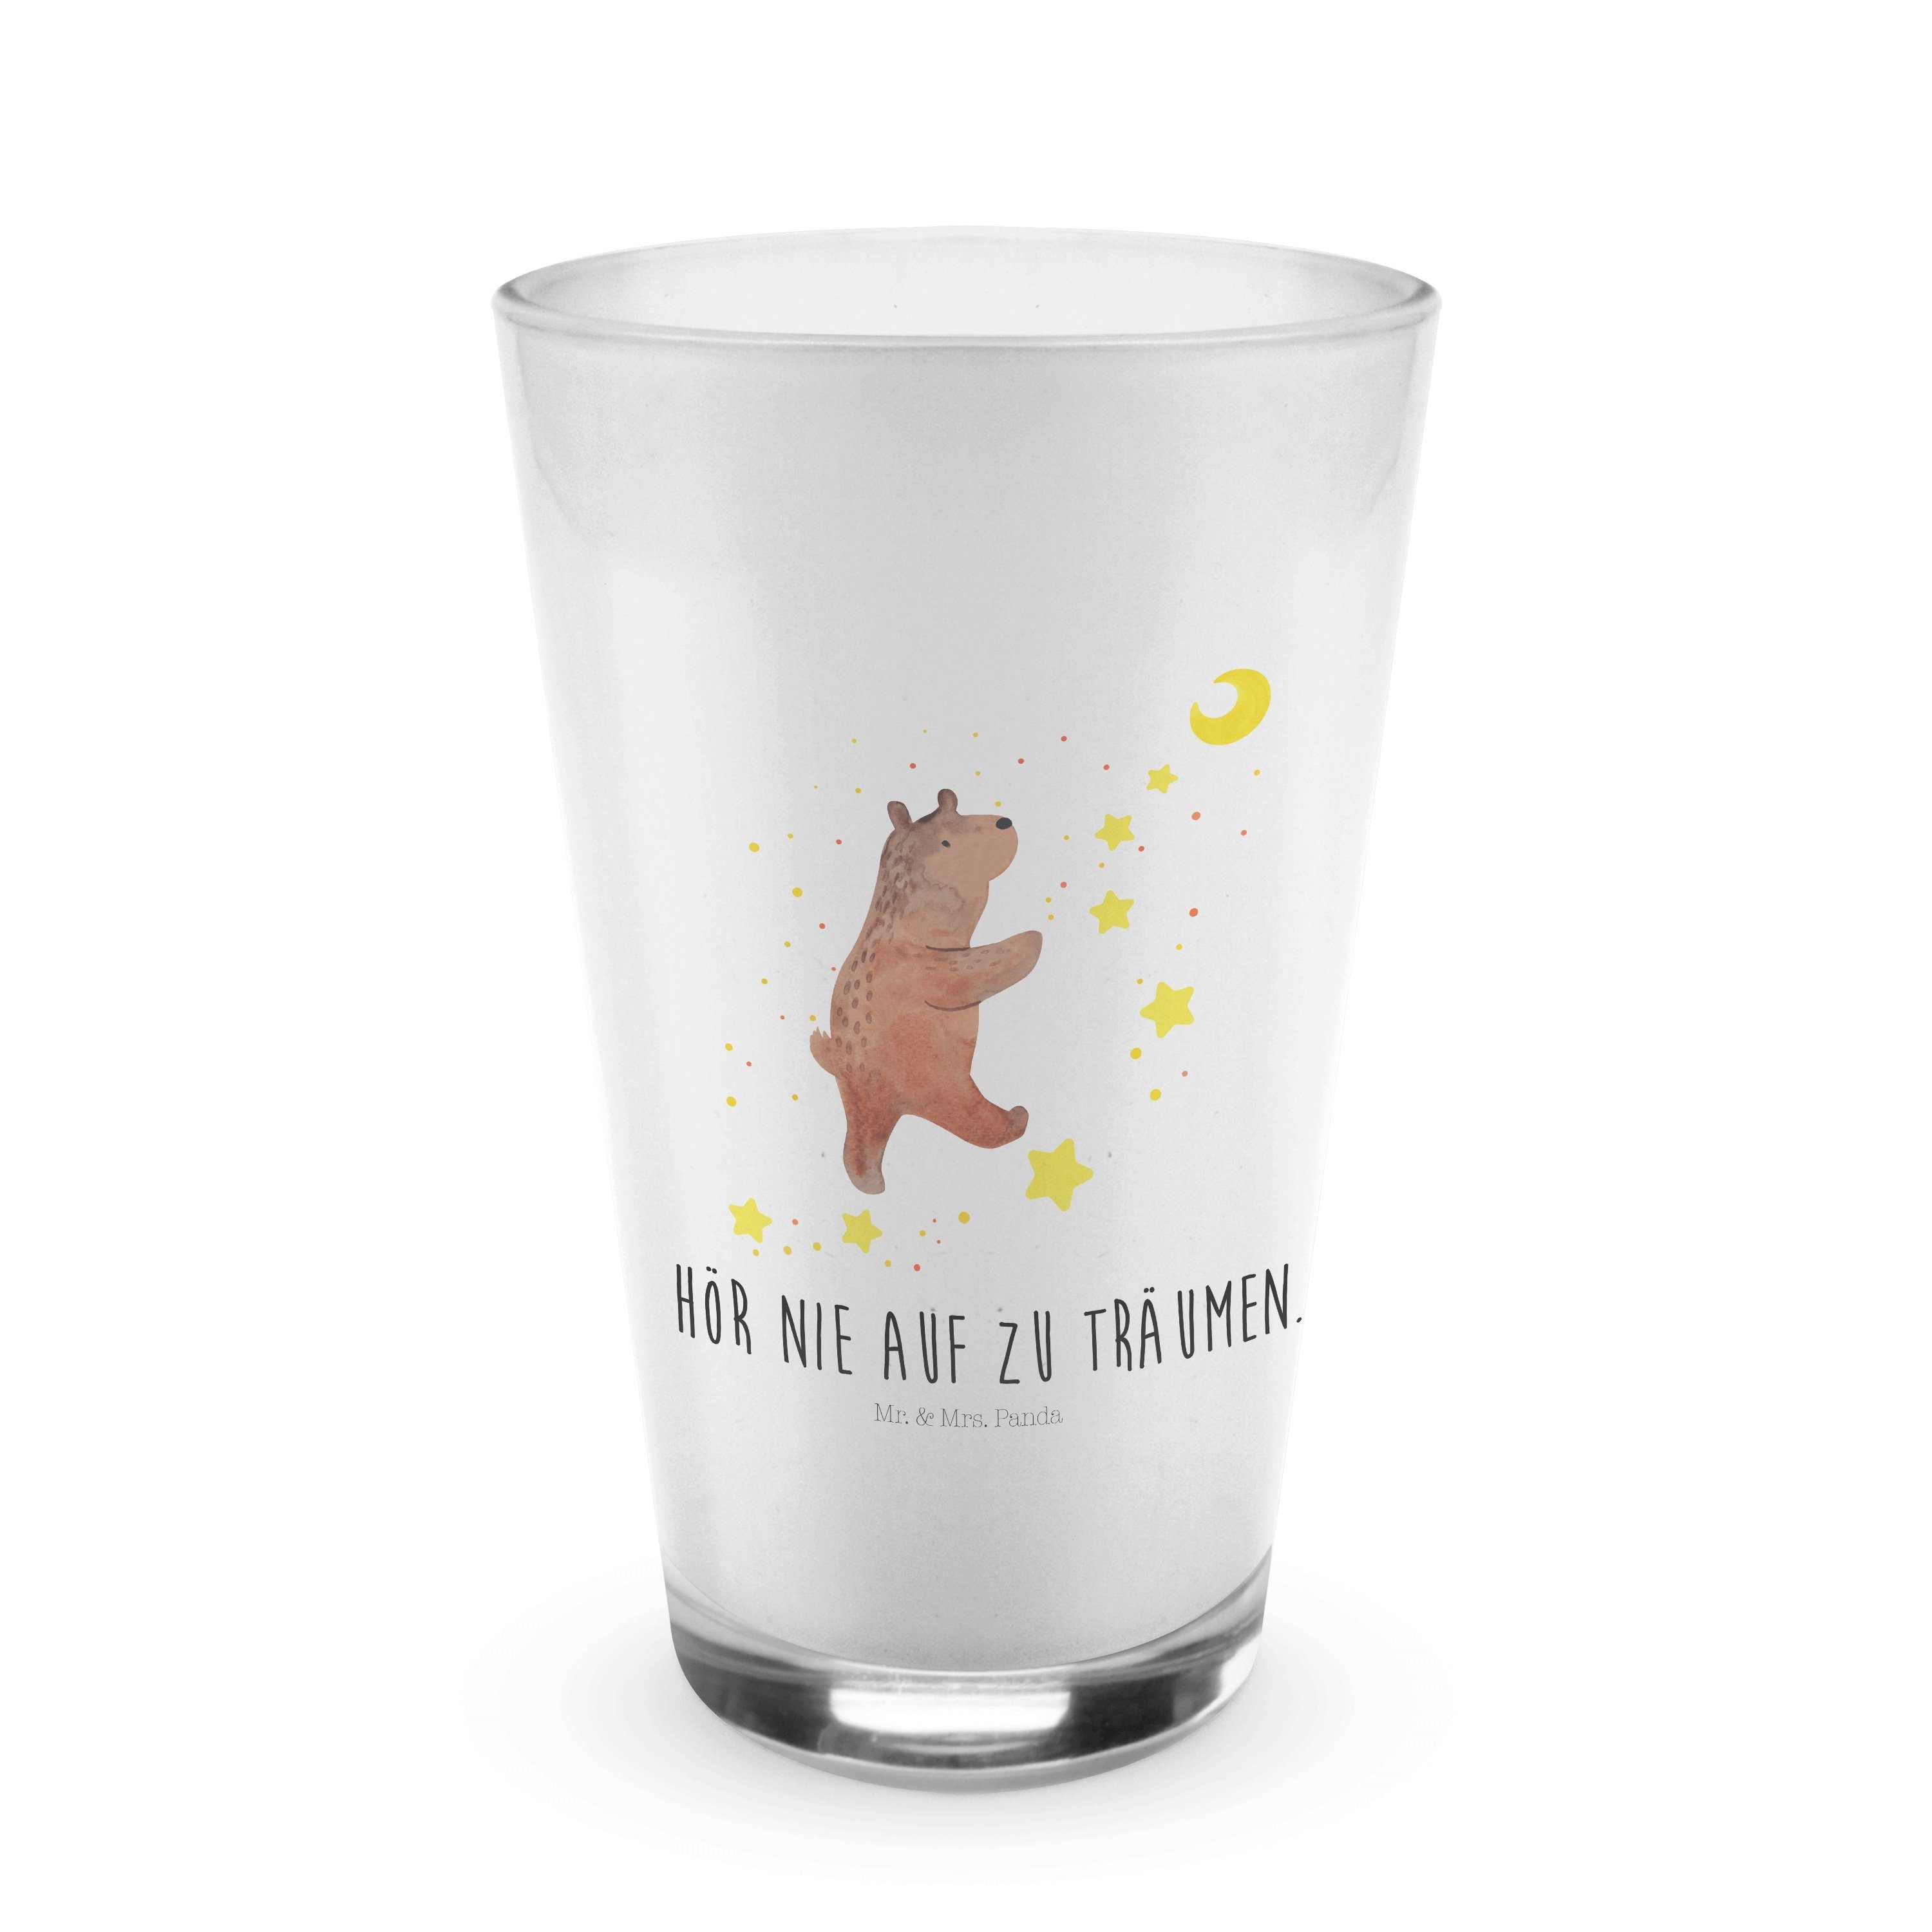 Mr. & Mrs. Panda Glas Bär Träume - Transparent - Geschenk, Teddybär, Cappuccino Glas, Glas, Premium Glas